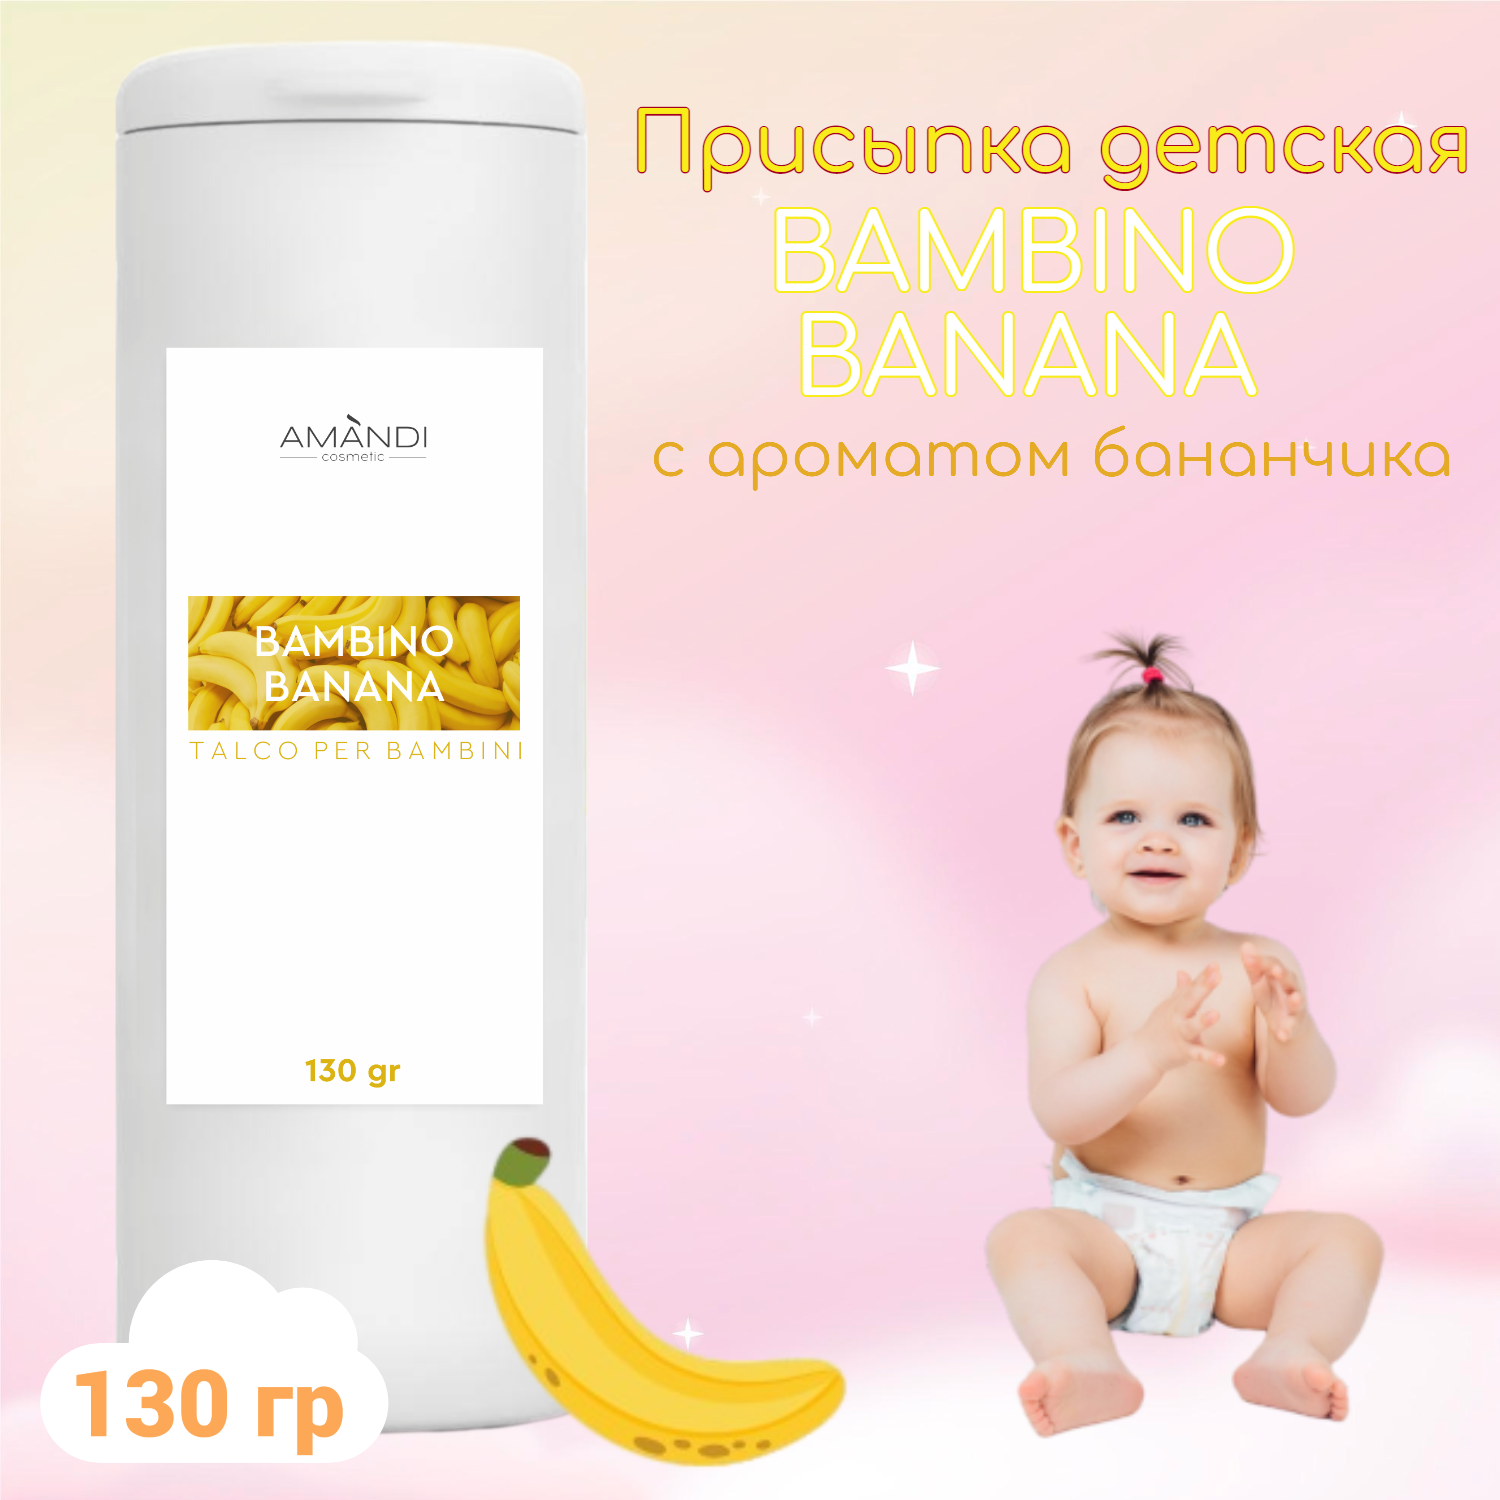 Присыпка детская AMANDI BAMBINO набор без отдушки и с ароматом банана 2 шт по 130 грамм - фото 3